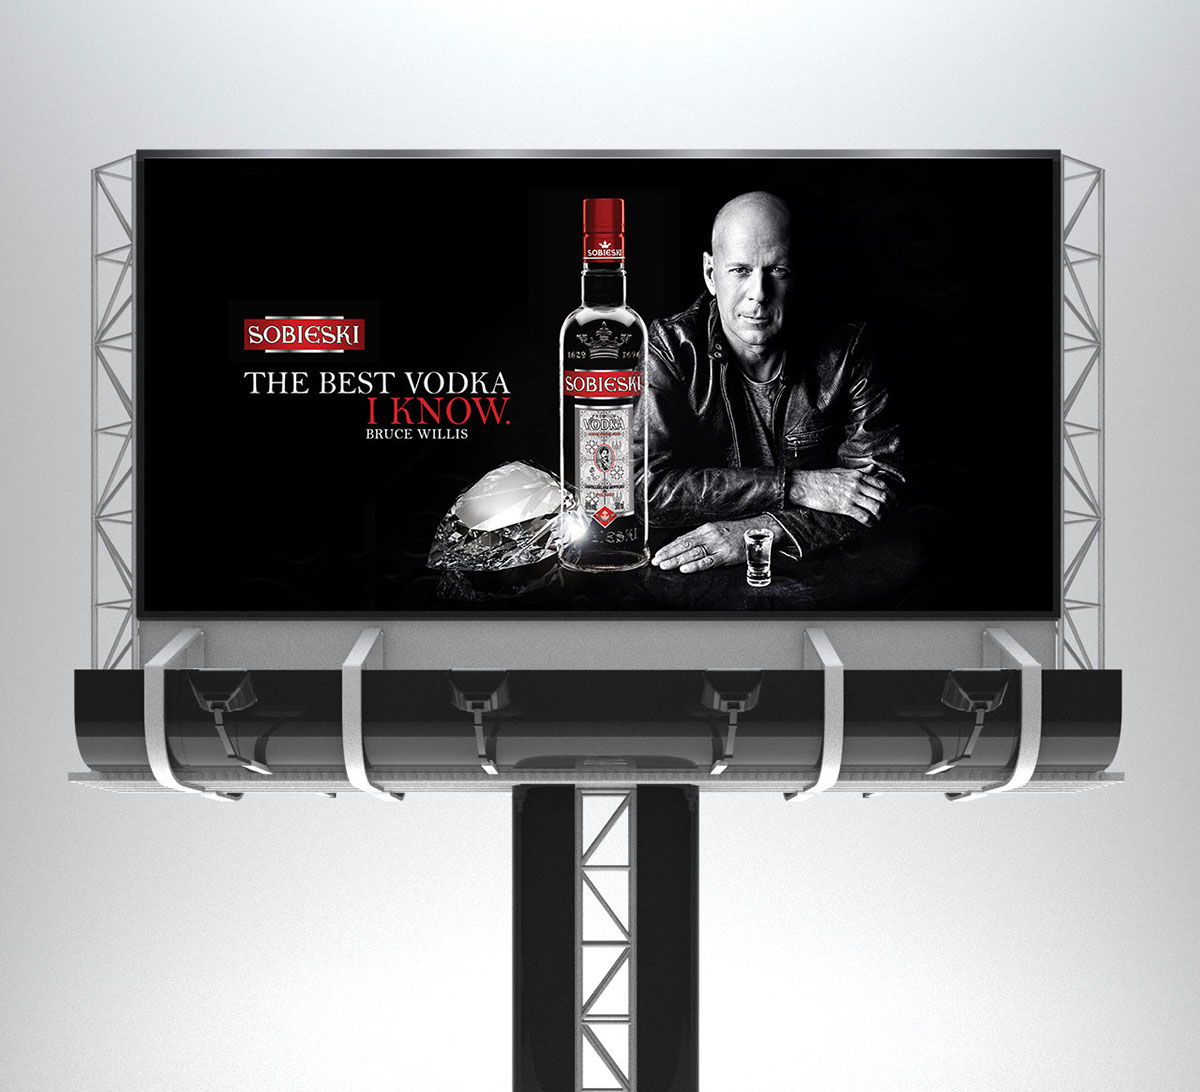 sobieski vodka Sobieski Bruce Willis gorkemdereli.com gorkemdereli grkmdrl bruce willis gorkemdereli medcorp cyprus bruce willis sobieski